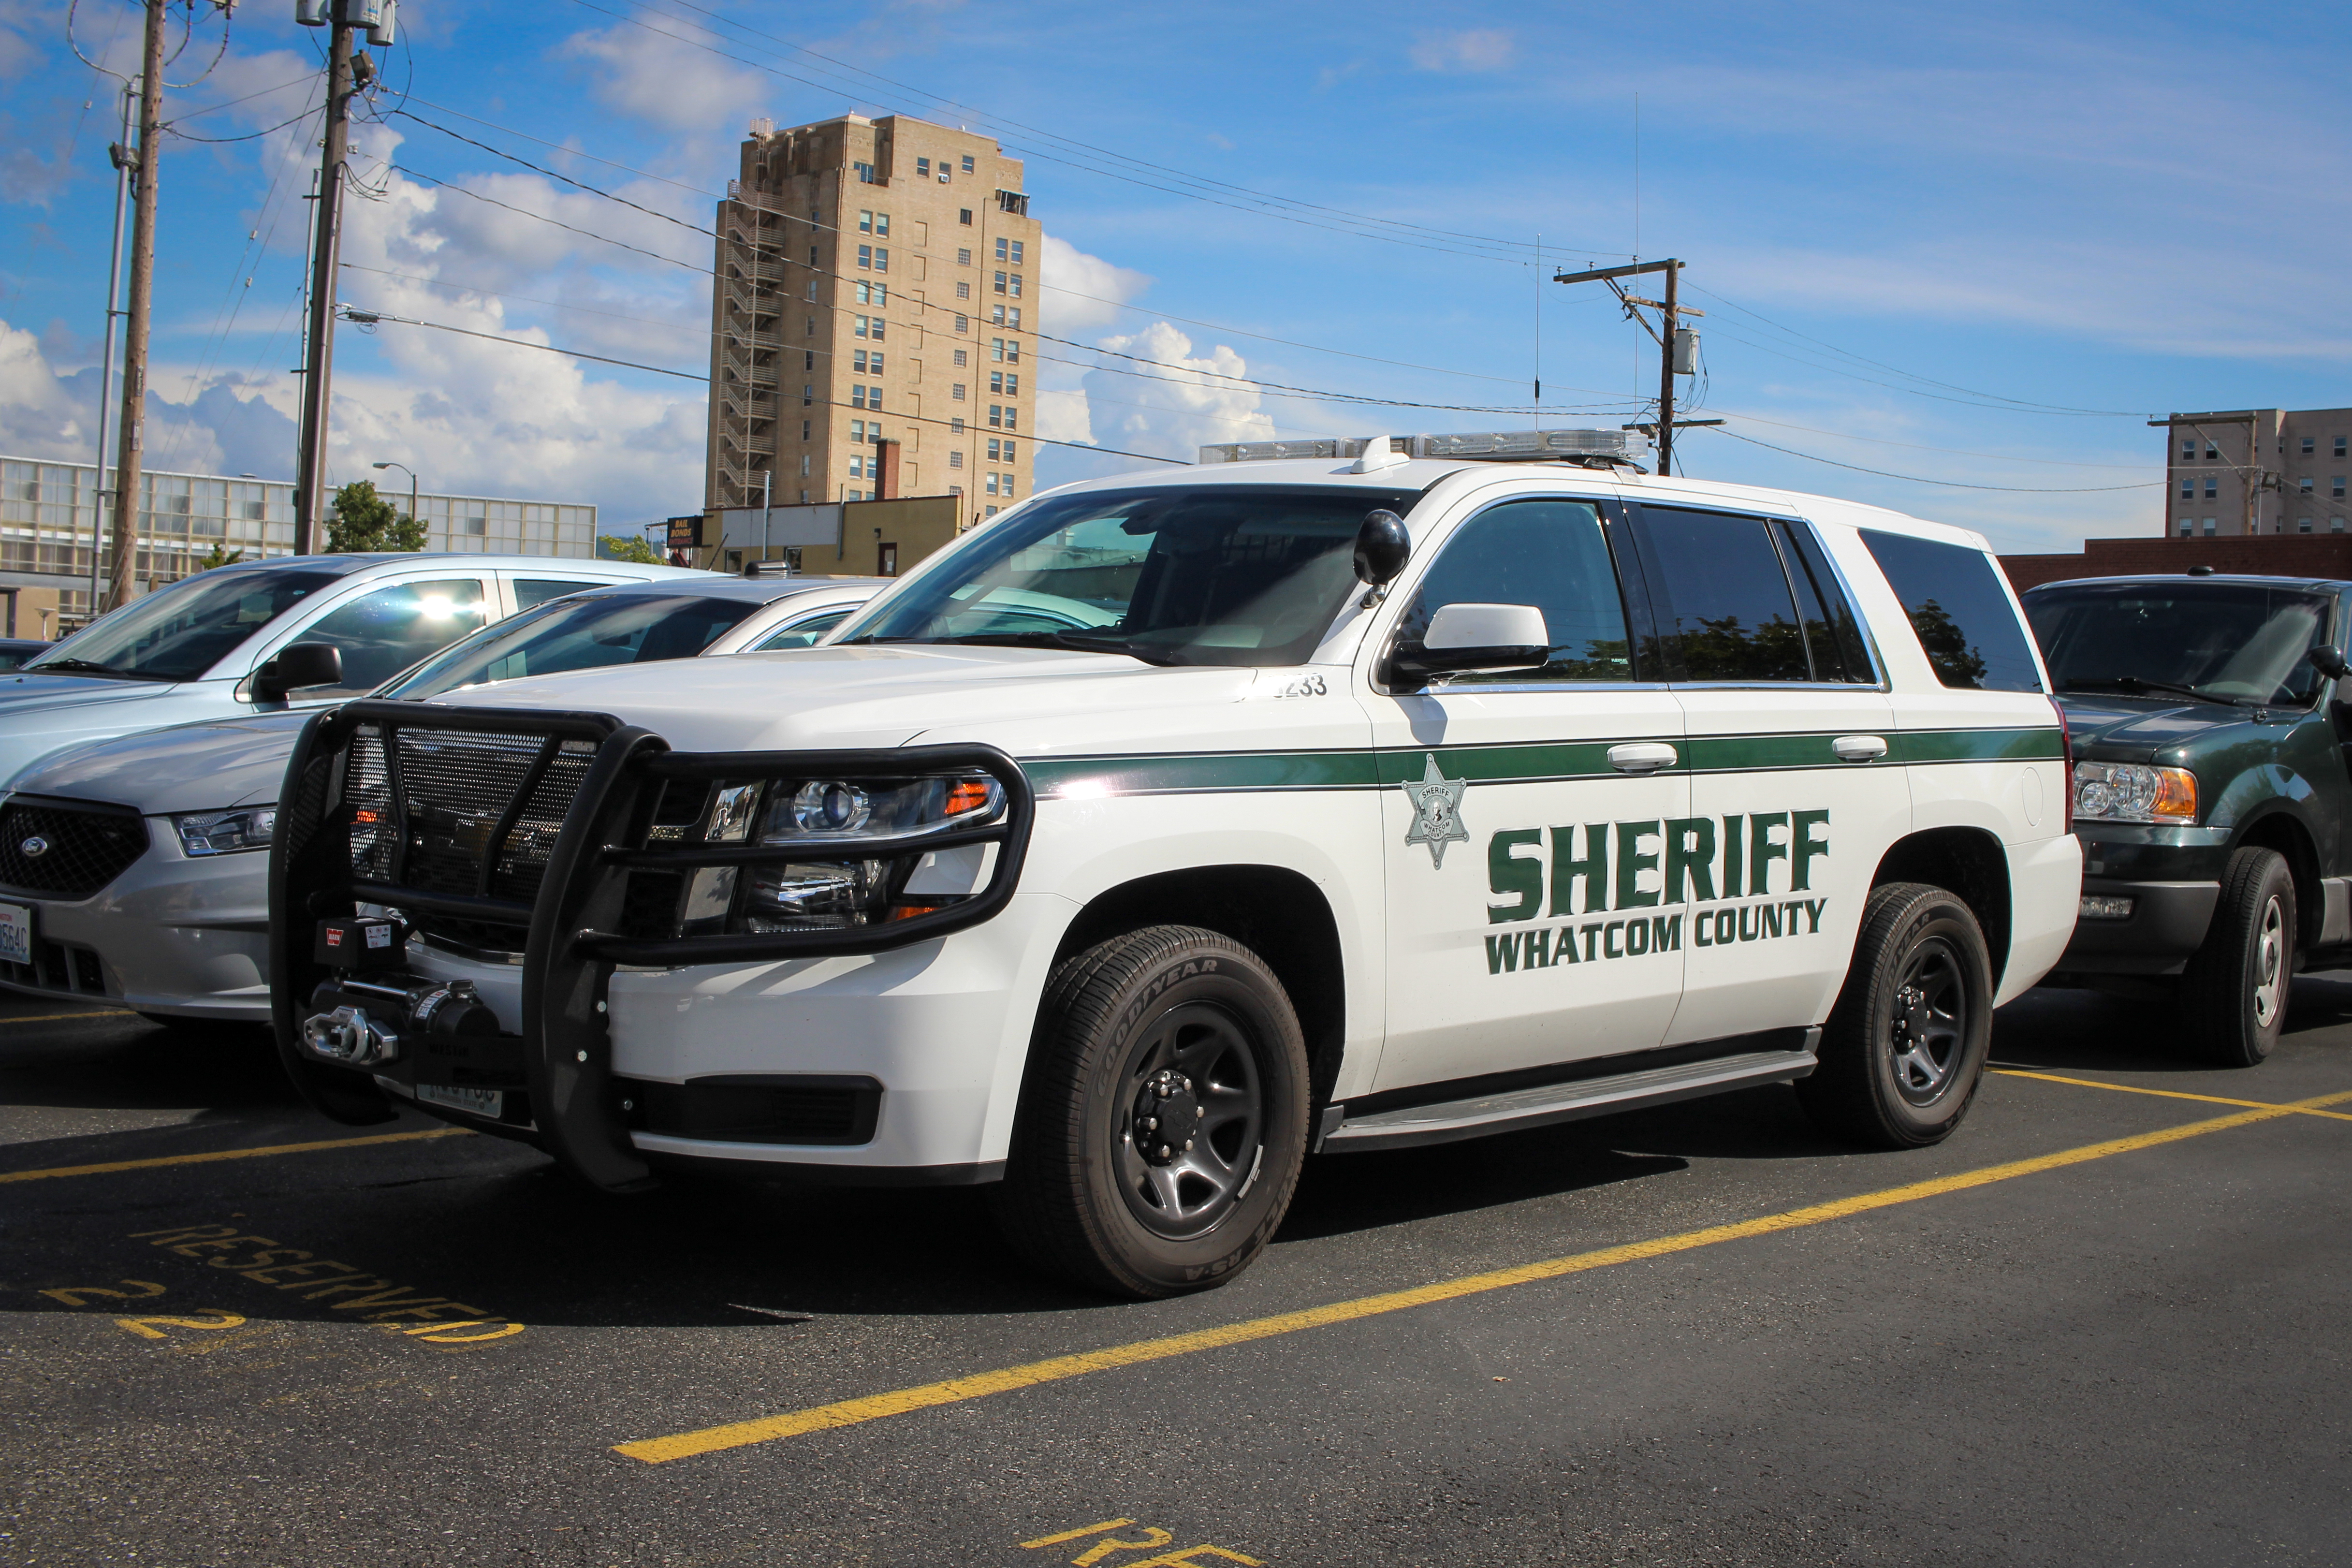 Whatcom Sheriff 2015 Chevrolet Tahoe (6233), 2015 Tahoe, Bellingham, Bellingham WA, Car, HQ Photo